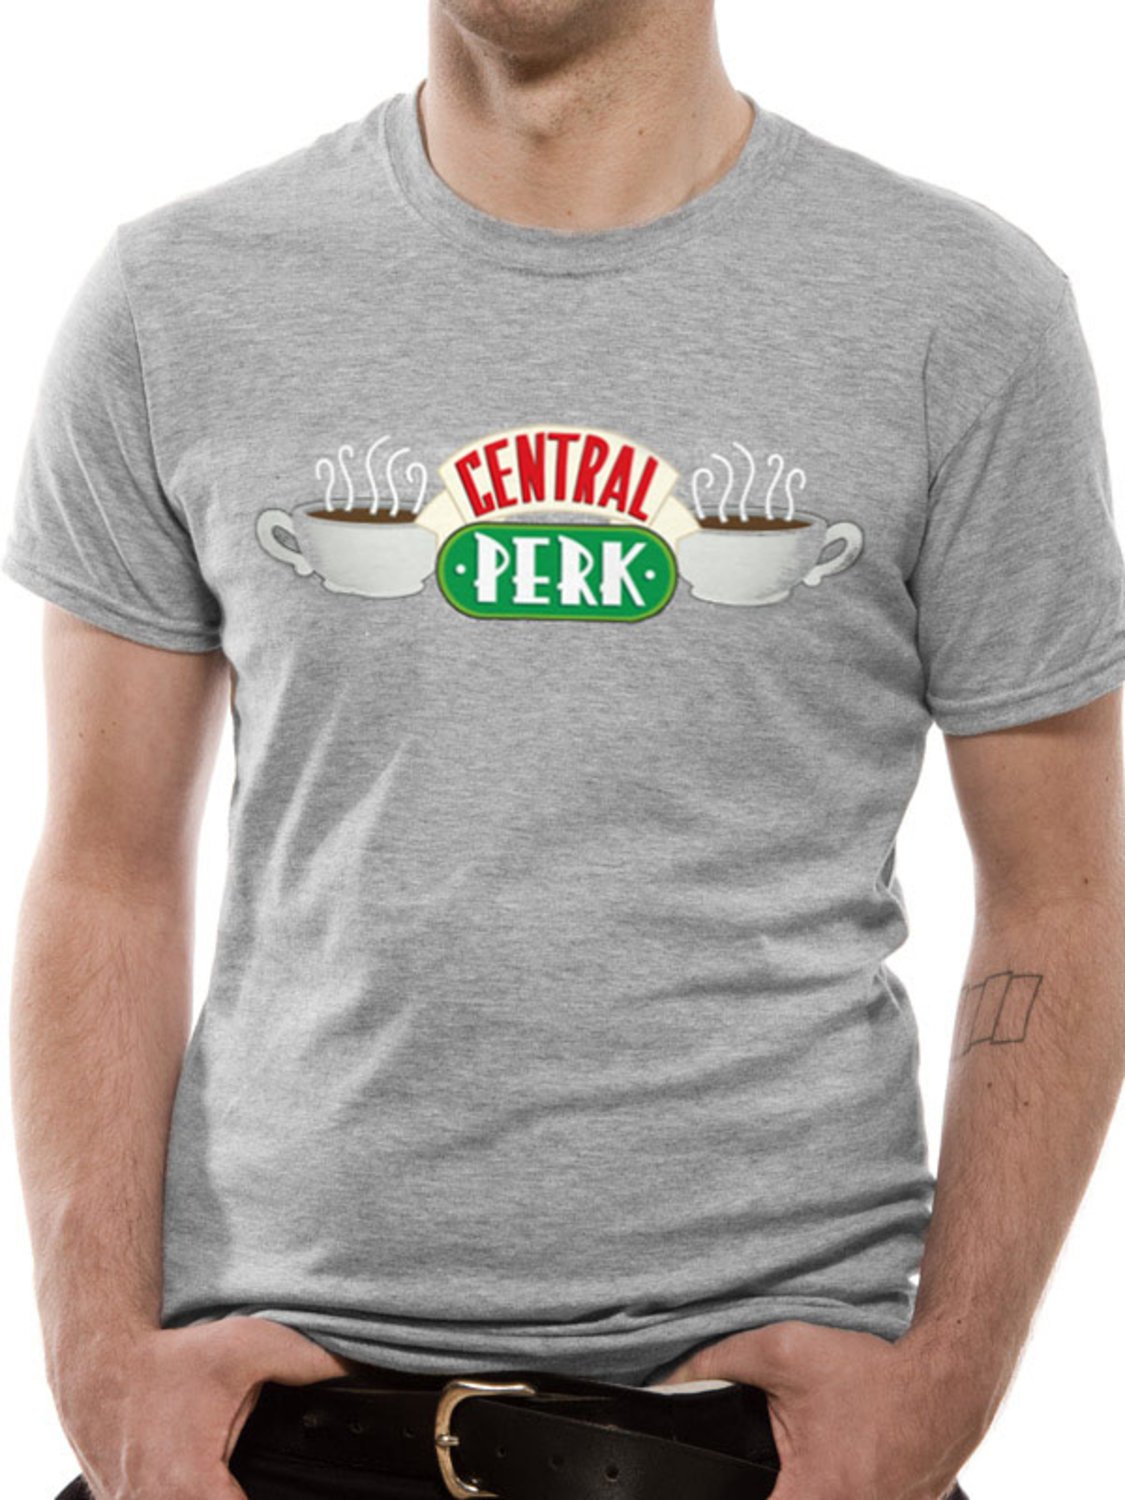 Køb Friends Central Perk T-Shirt